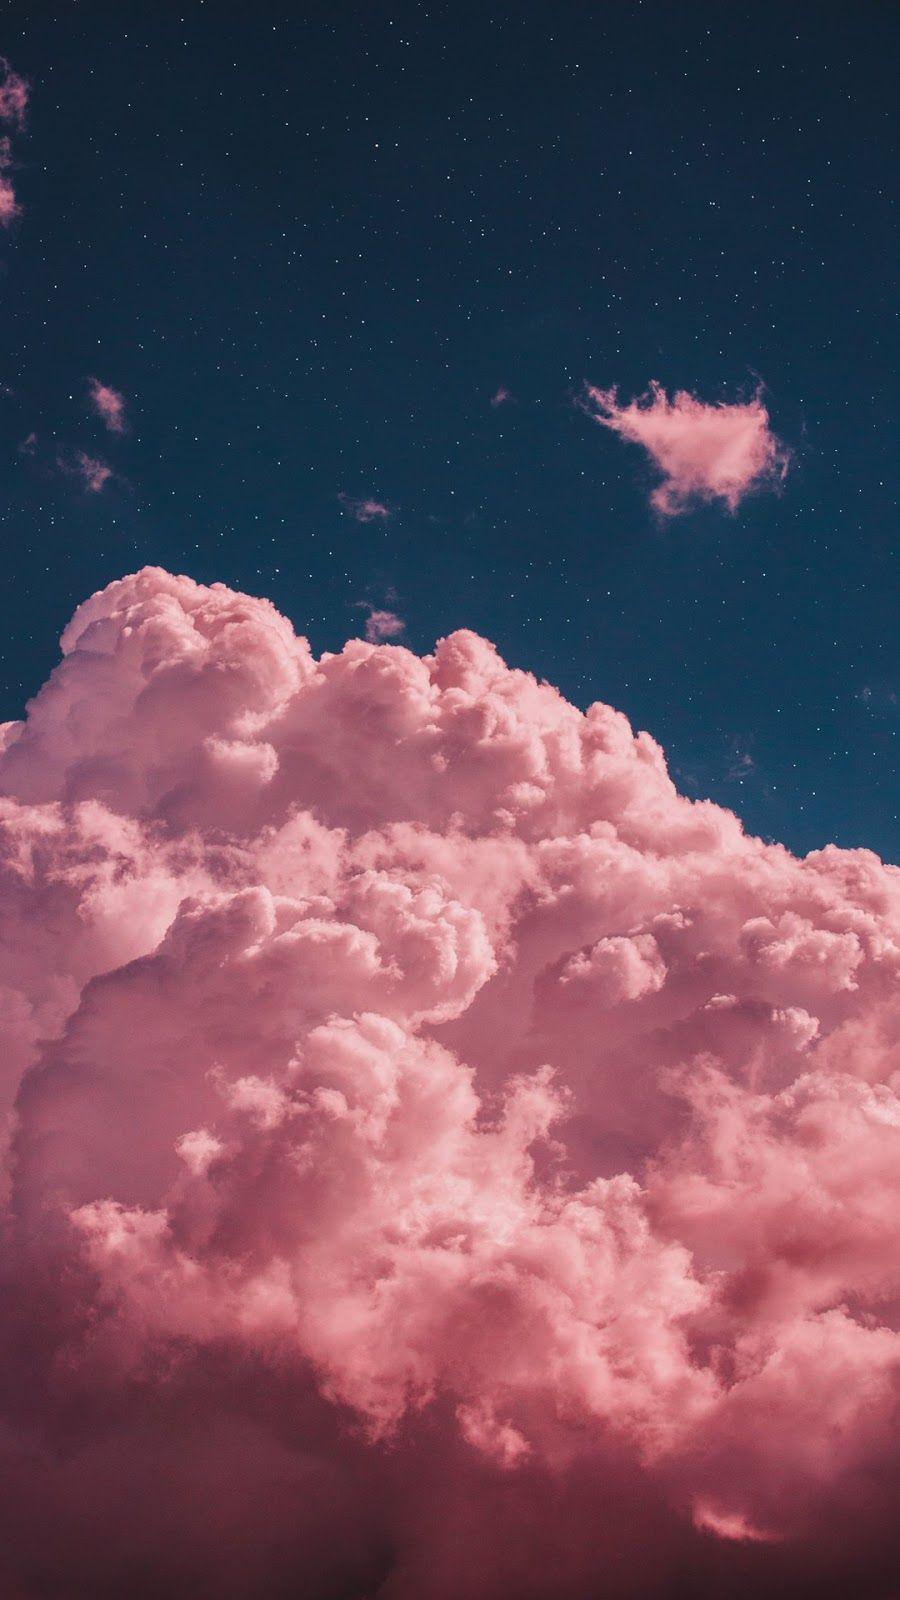 Pink Cloud Background Images  Free Download on Freepik